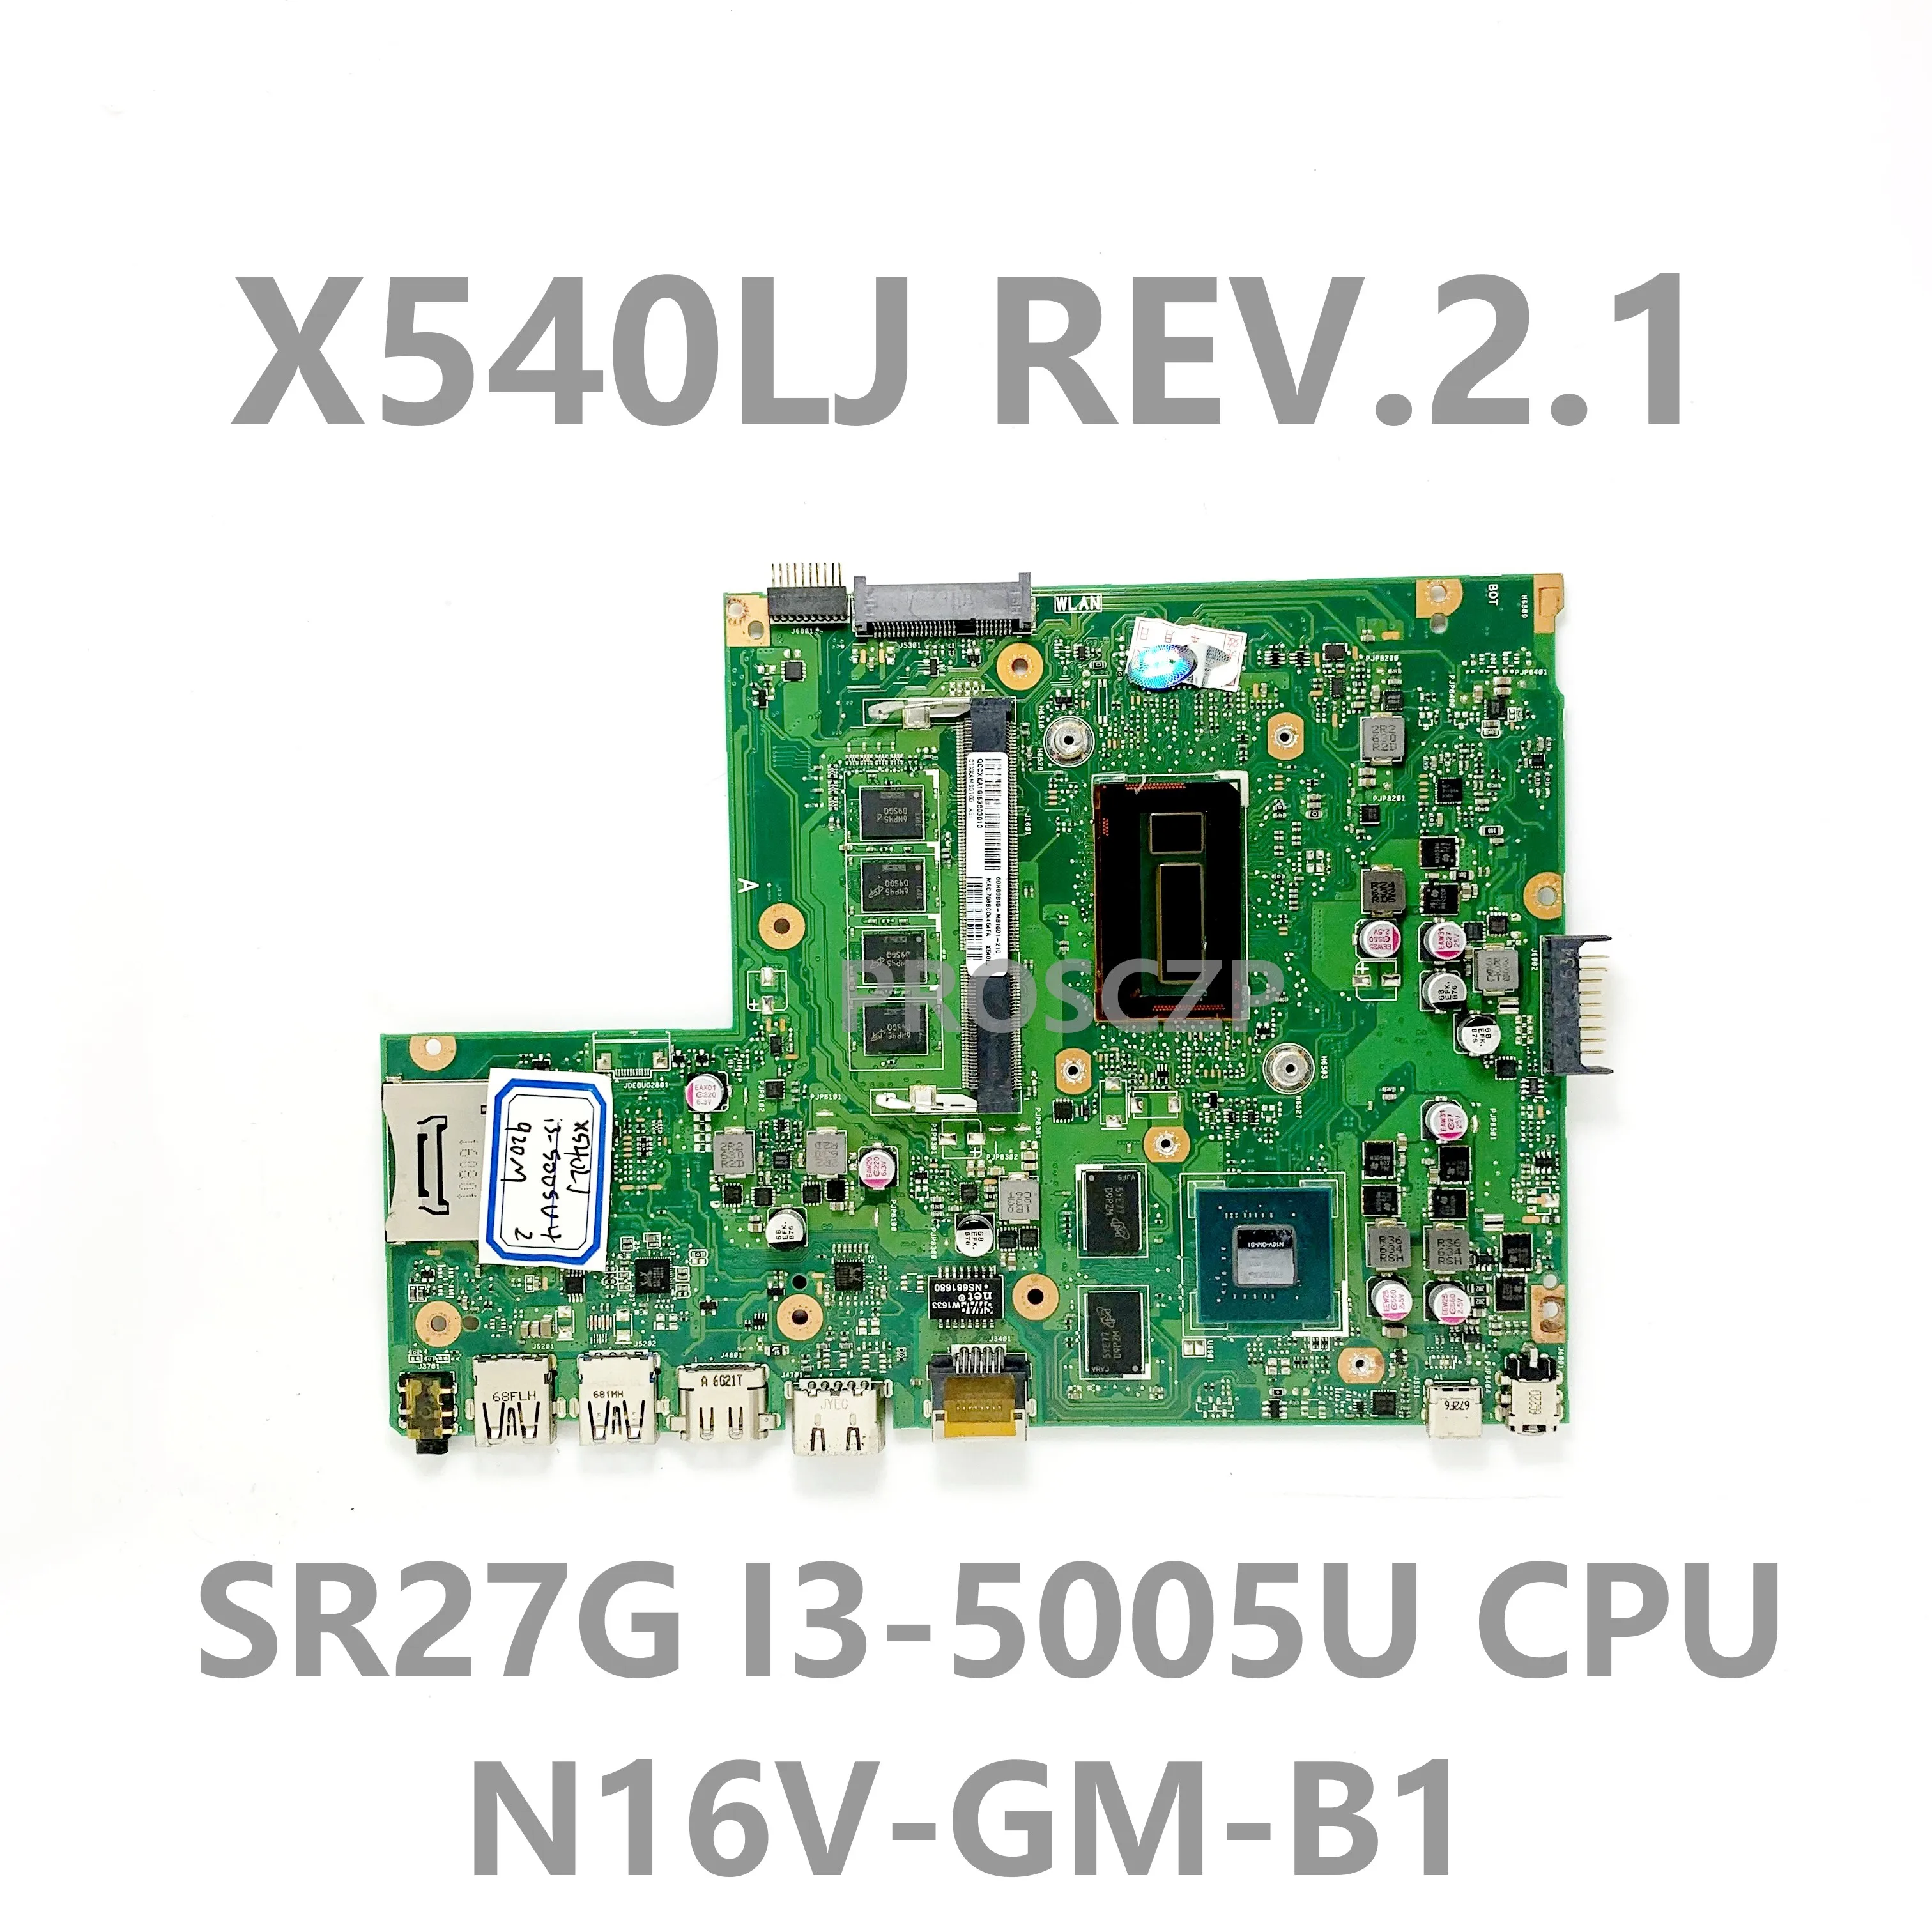 

X540LJ REV:2.1 High Quality Mainboard For ASUS X540LJ Laptop Motherboard With SR27G I3-5005U CPU N16V-GM-B1 100% Full Tested OK